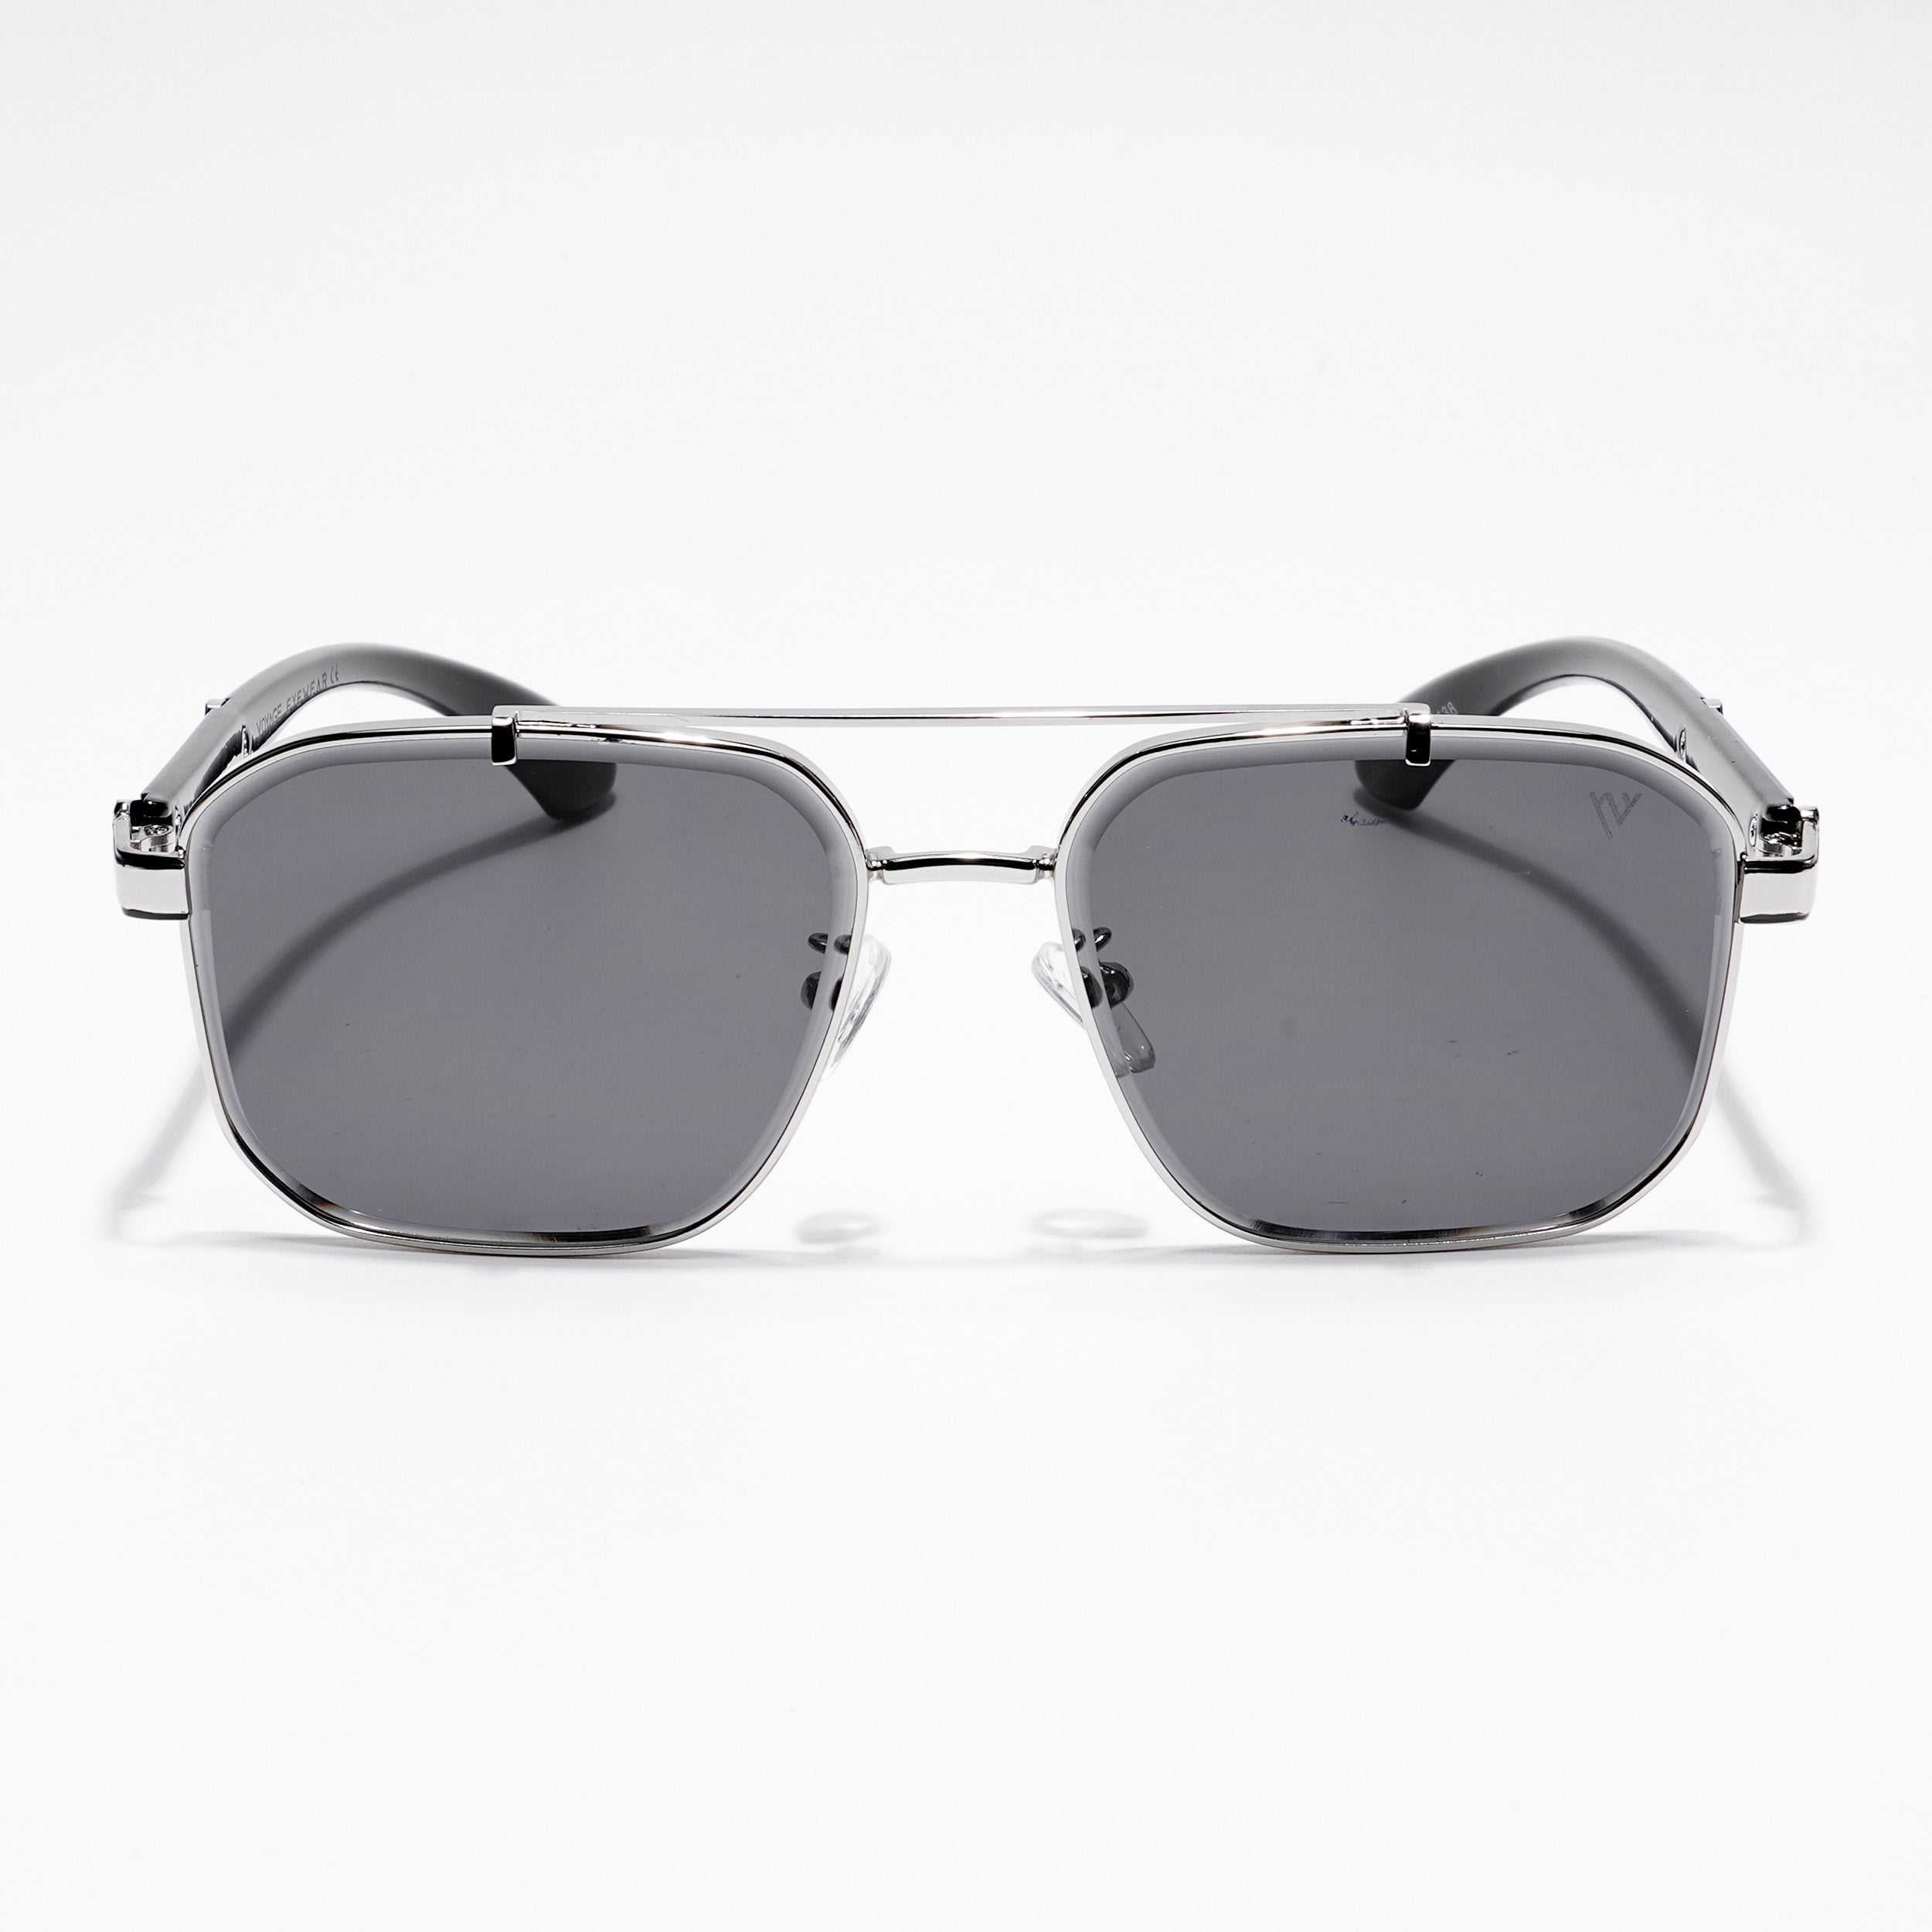 Voyage Black Wayfarer Sunglasses for Men & Women - MG4164